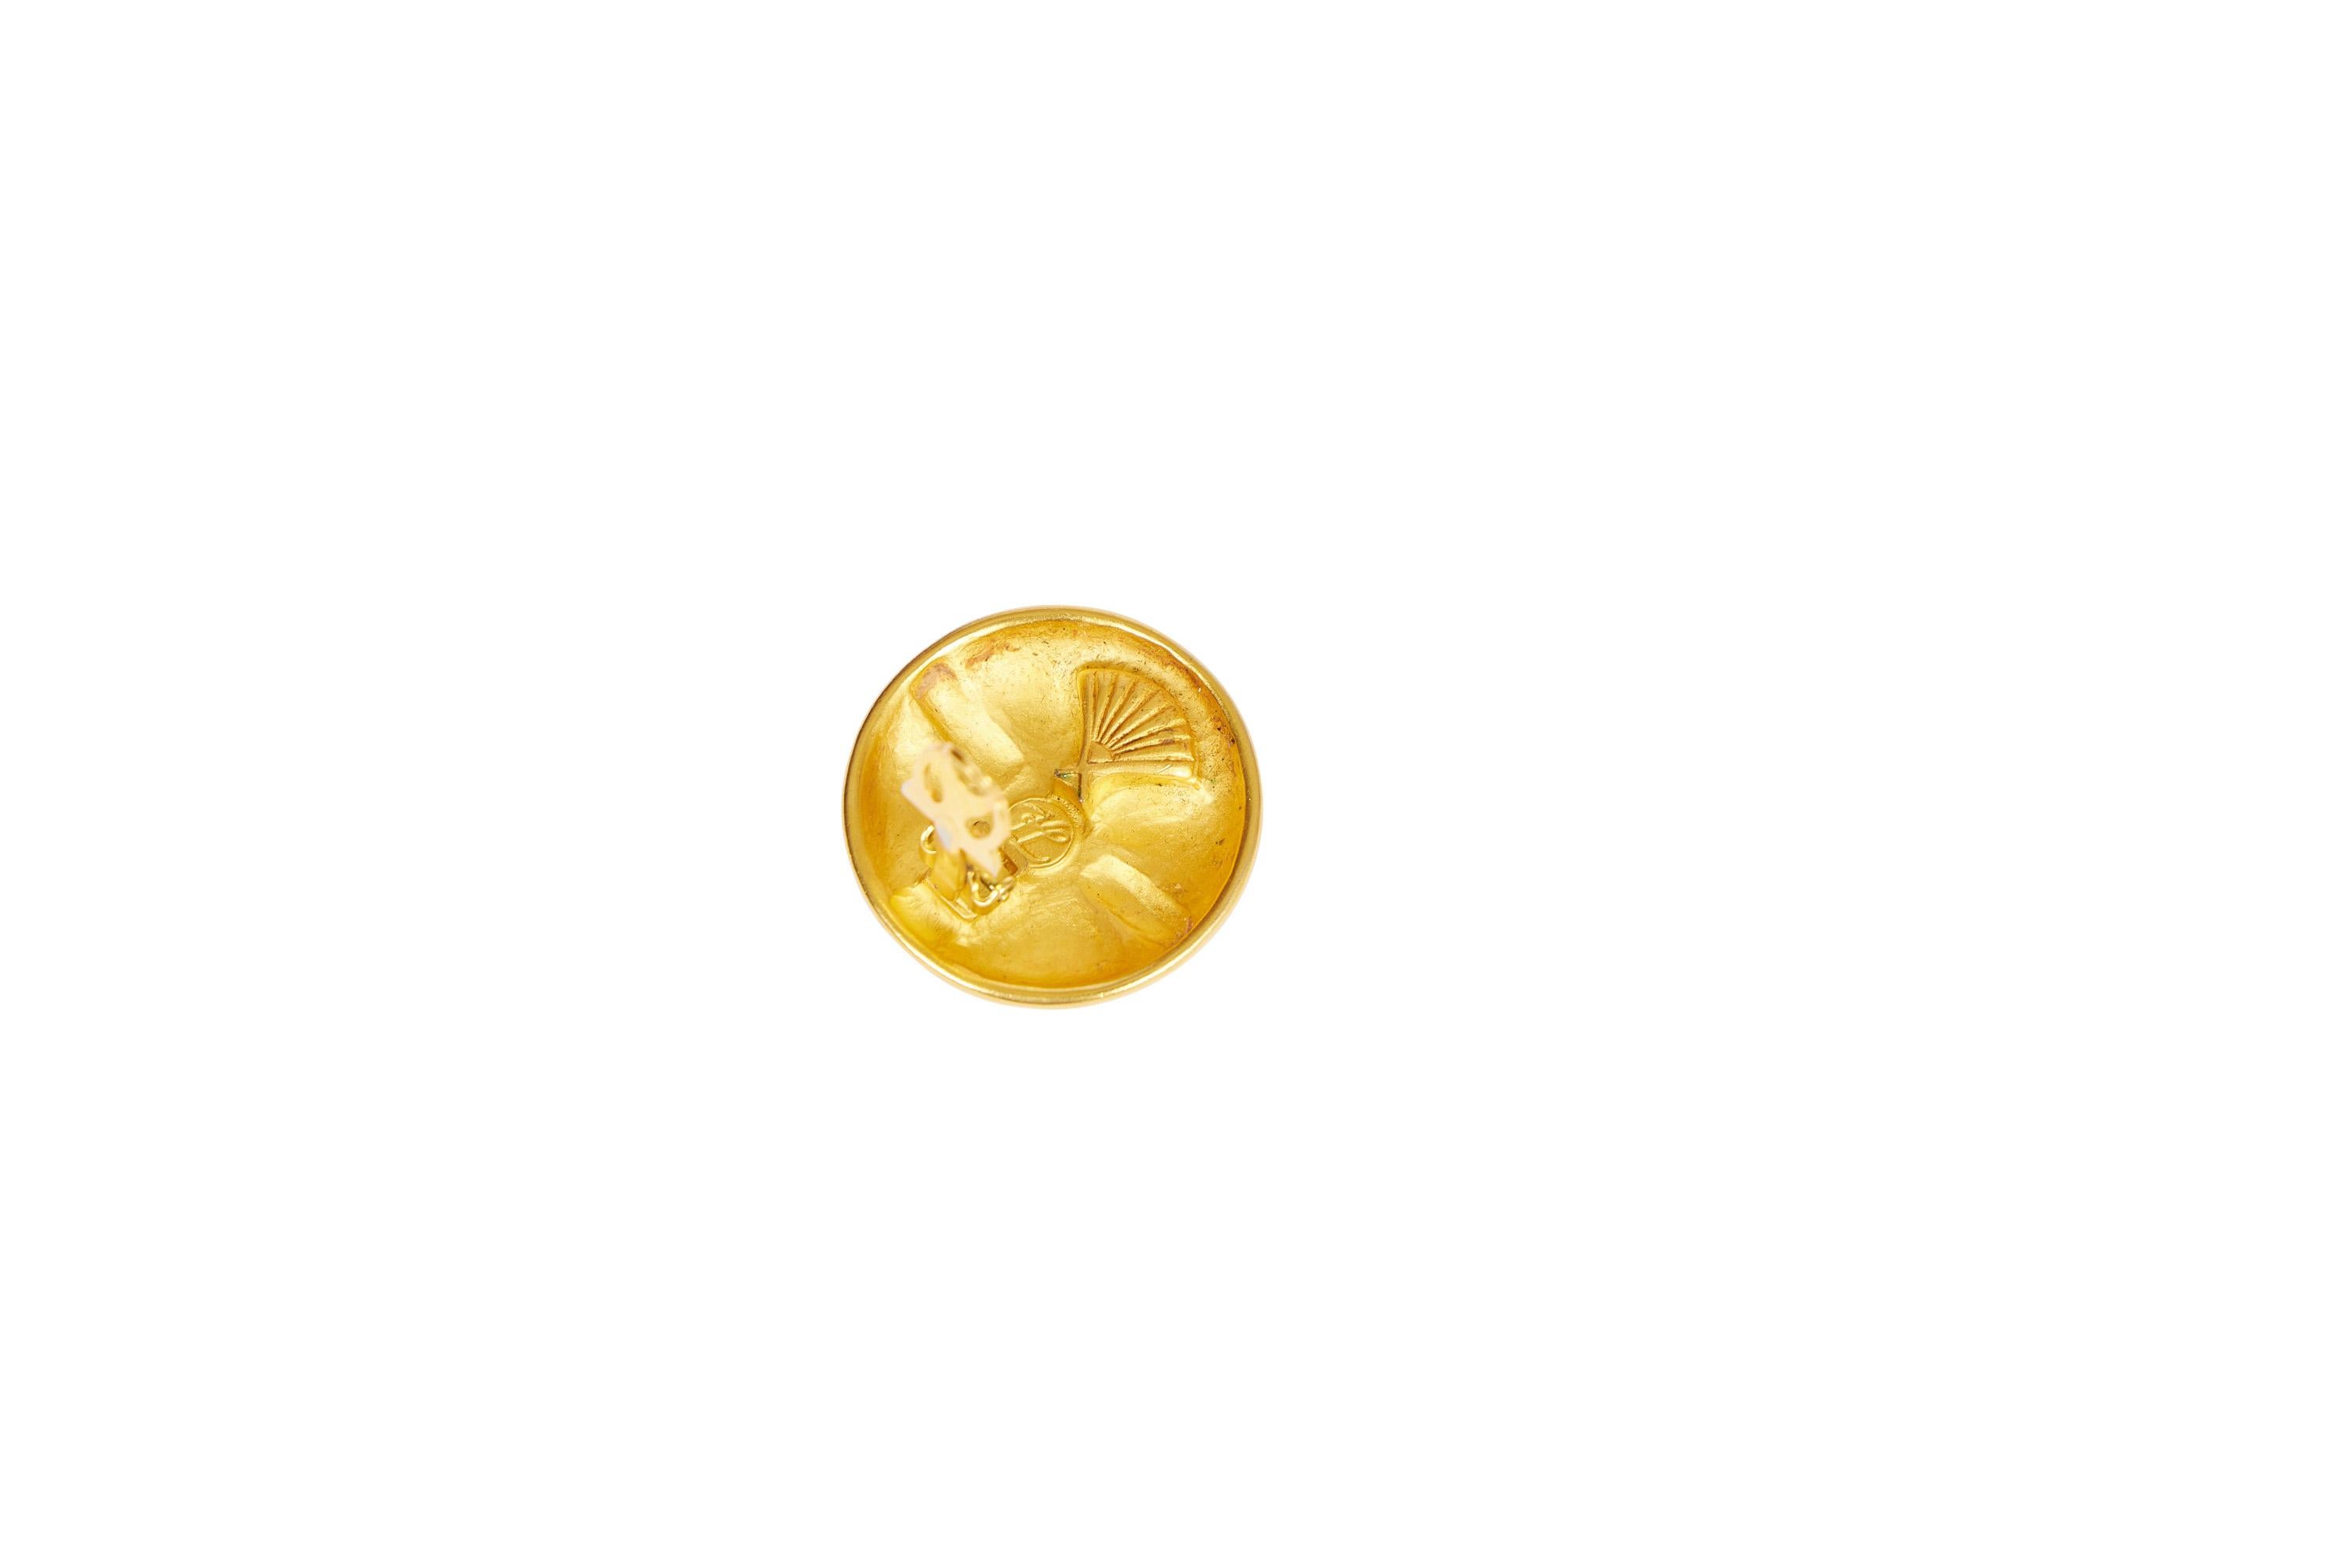 Karl Lagerfeld satinierte goldene Mehrfachlogo-Clip-Ohrringe. Kommt mit Samtbeutel oder Box.
